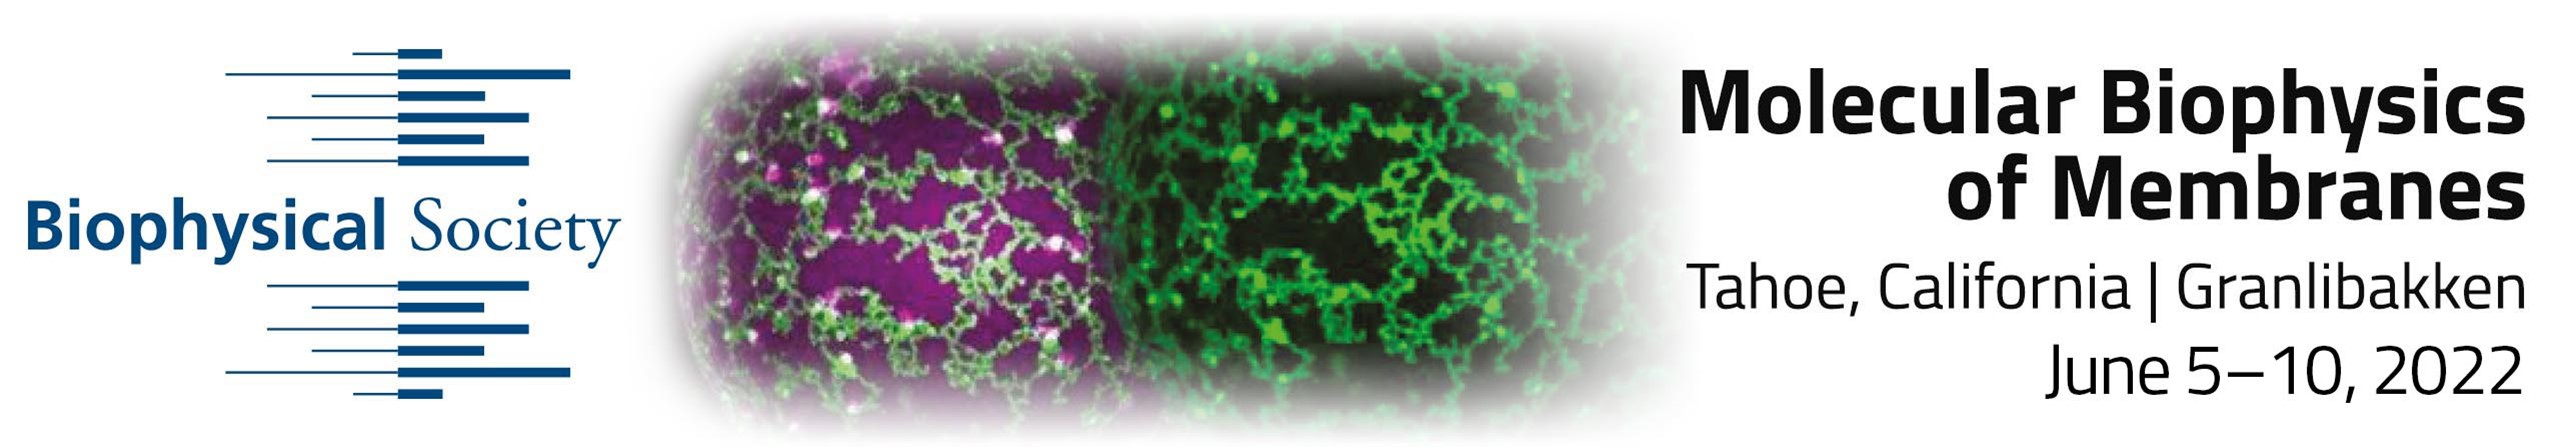 Molecular Biophysics of Membranes Cover Image